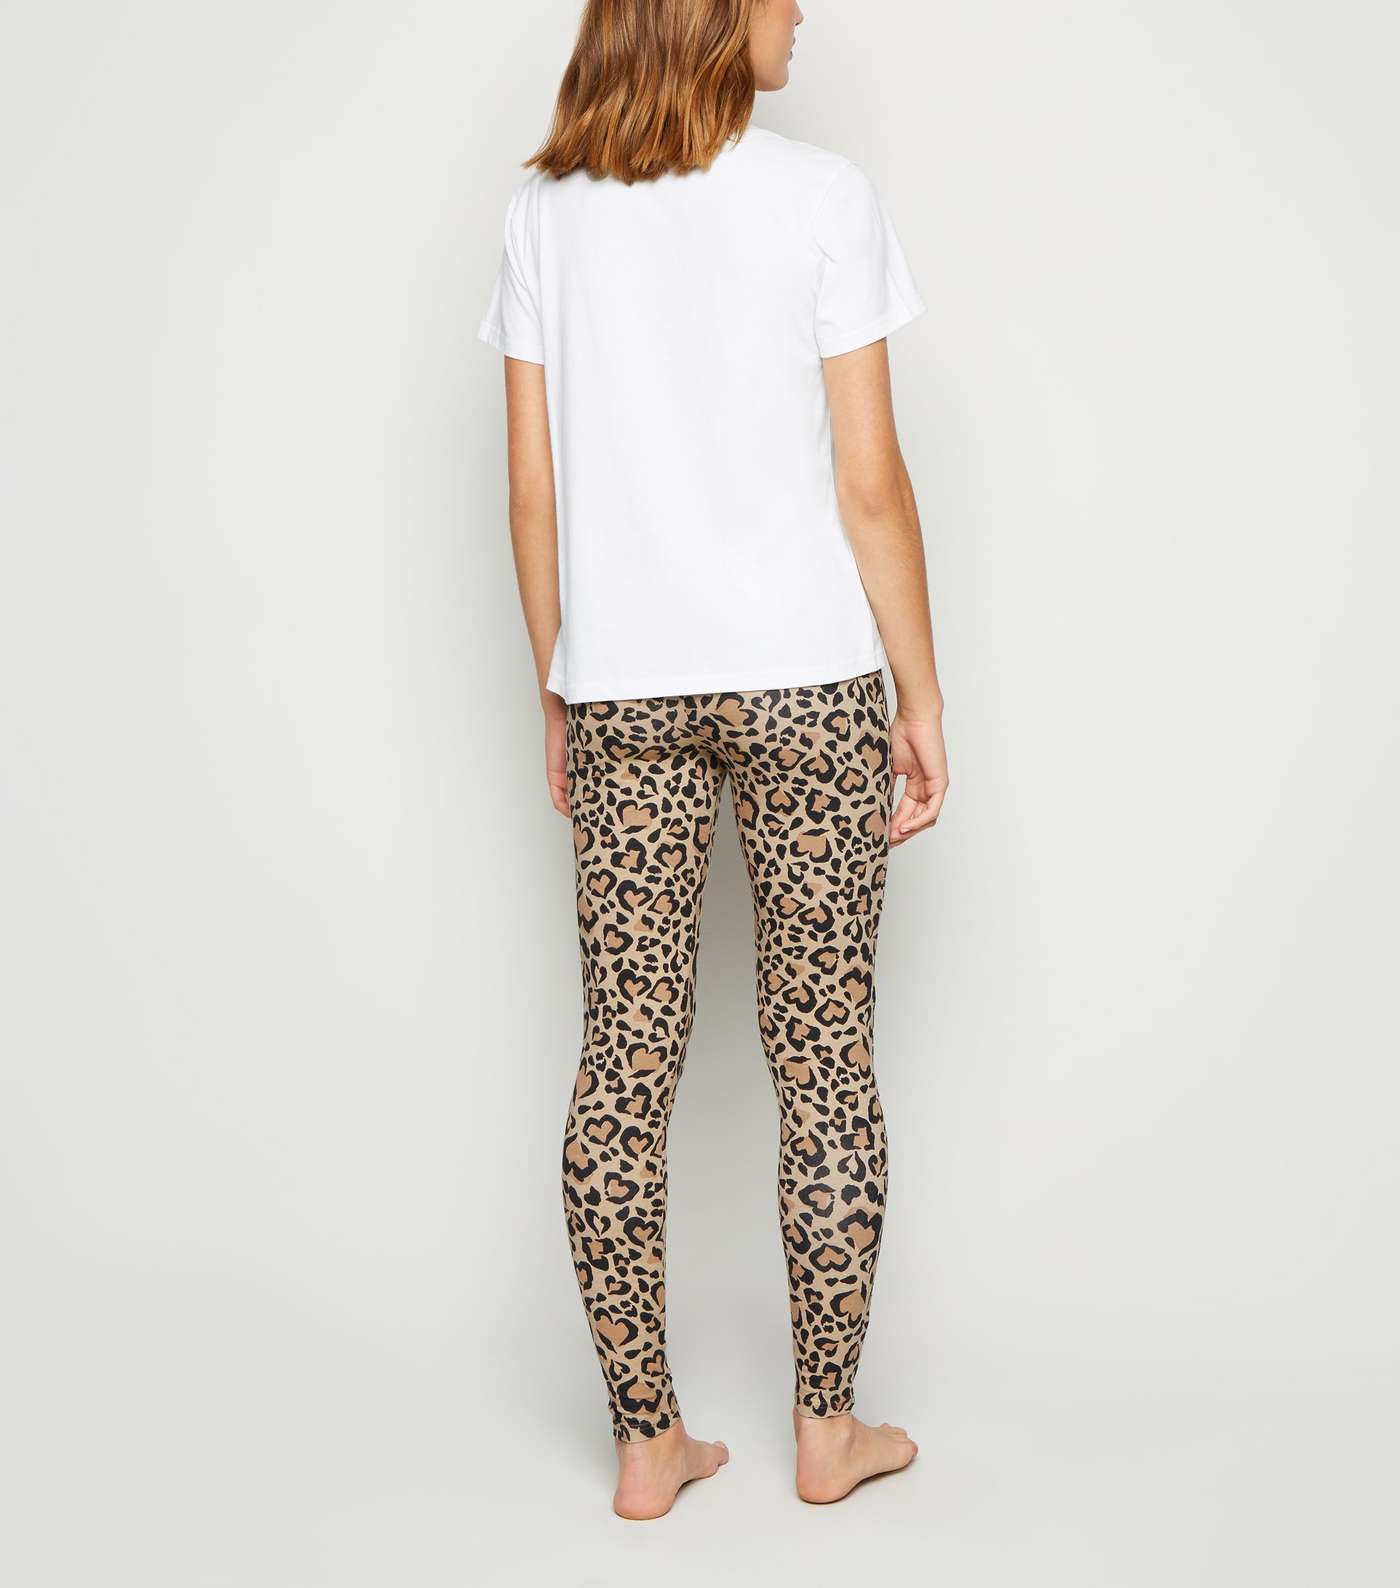 White Leopard Print Slogan Leggings Pyjama Set Image 2